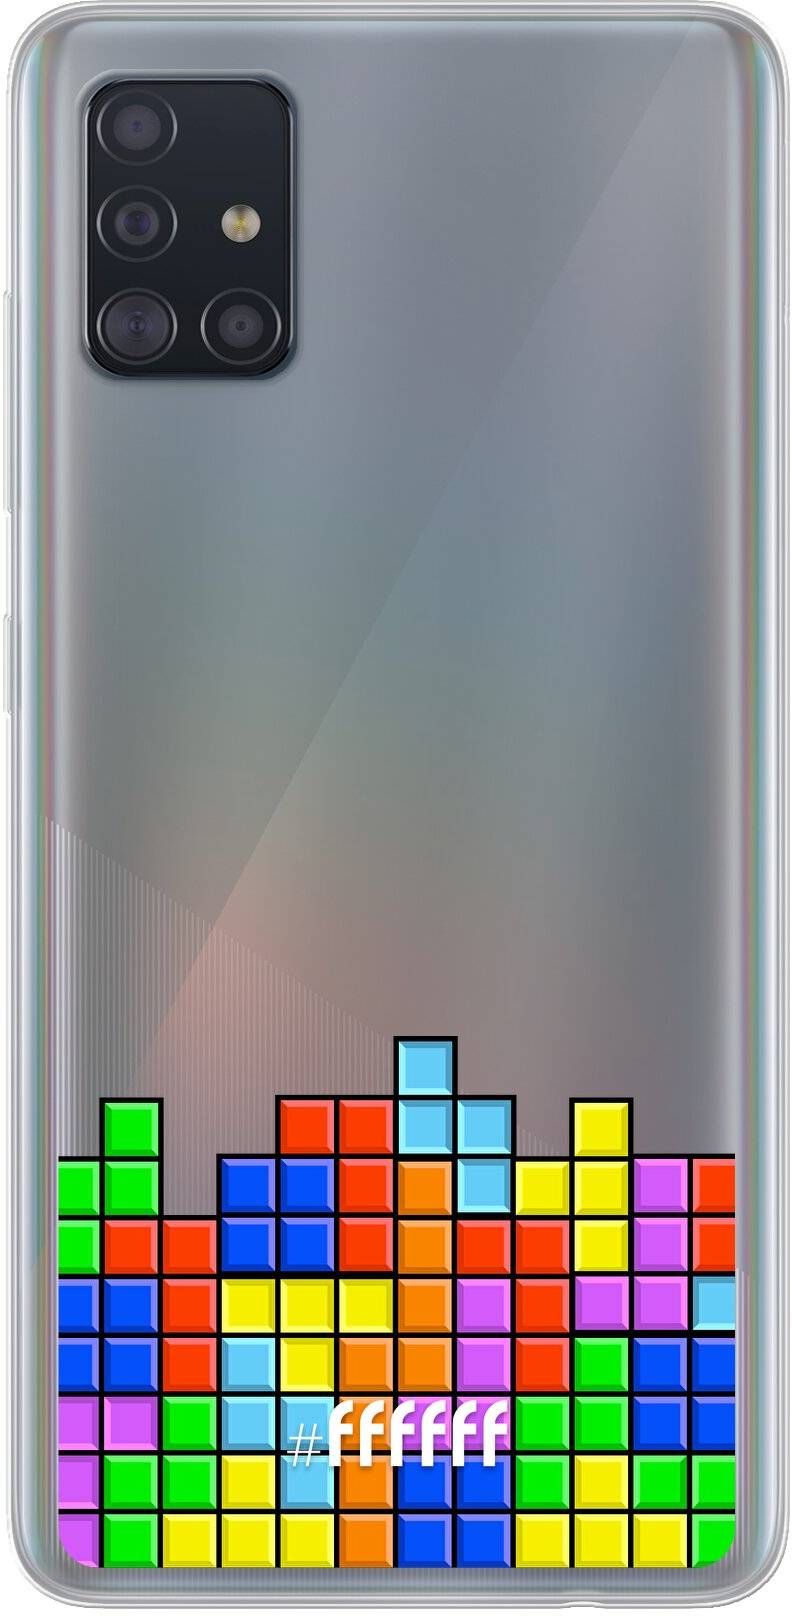 Tetris Galaxy A51